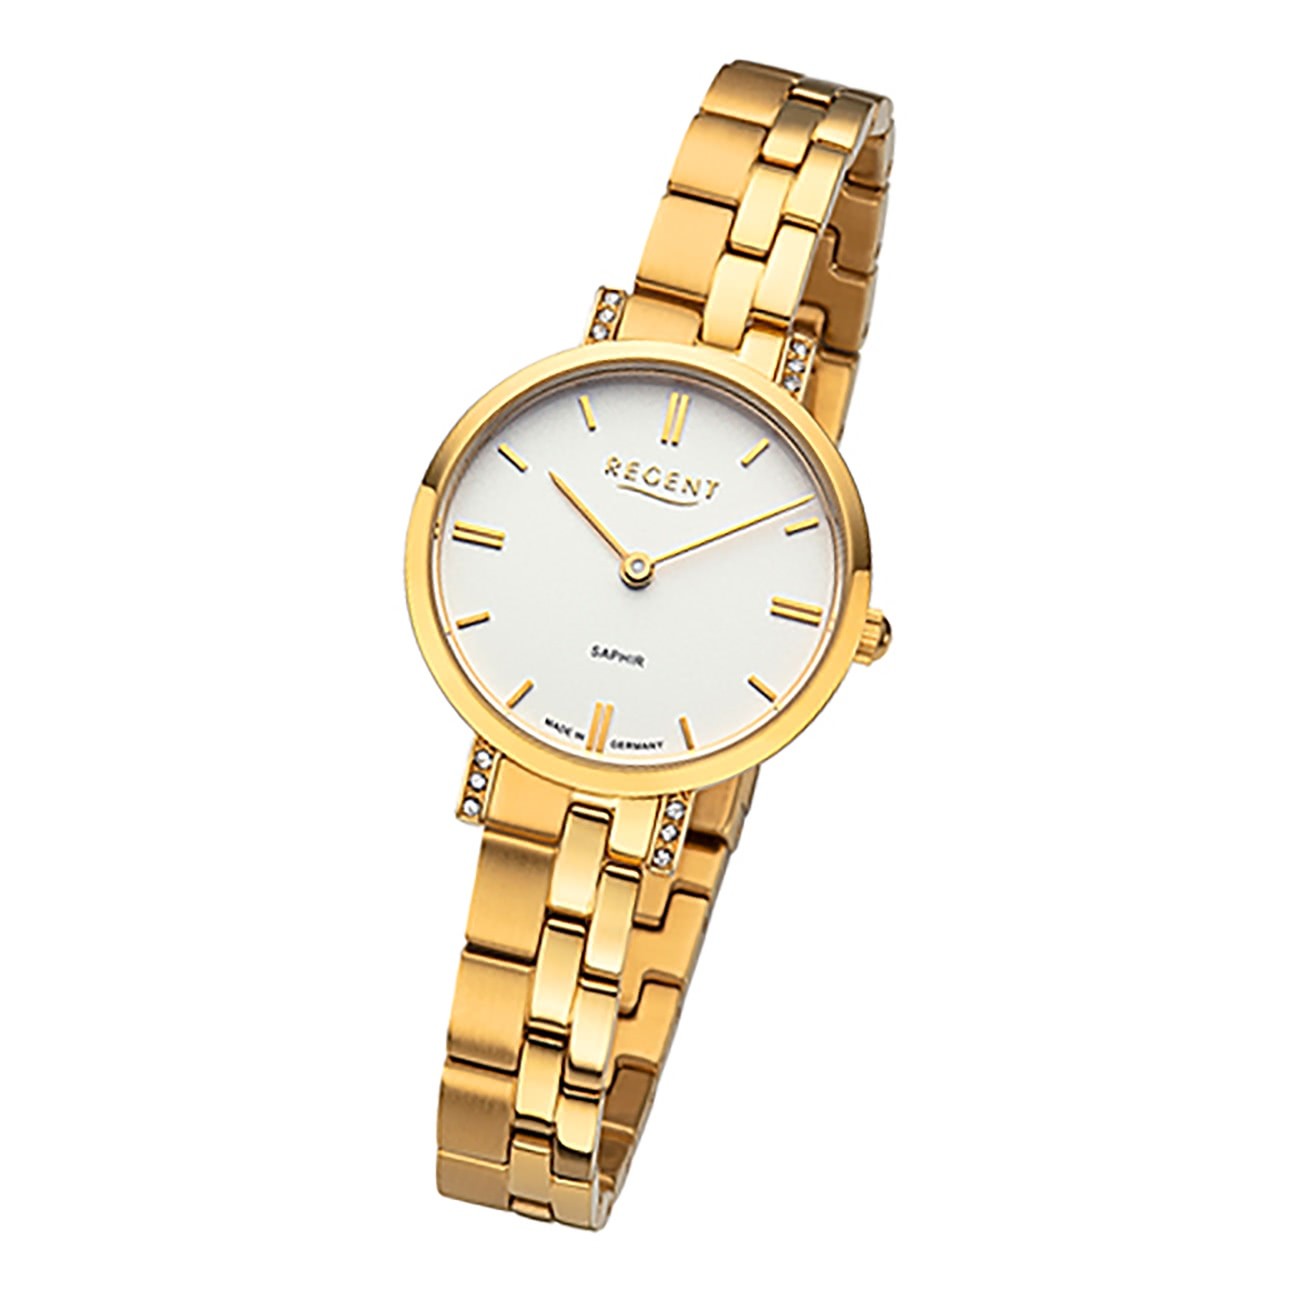 Regent Damen Armbanduhr Analog GM-2122 Quarz-Uhr Metallband gold URGM2122